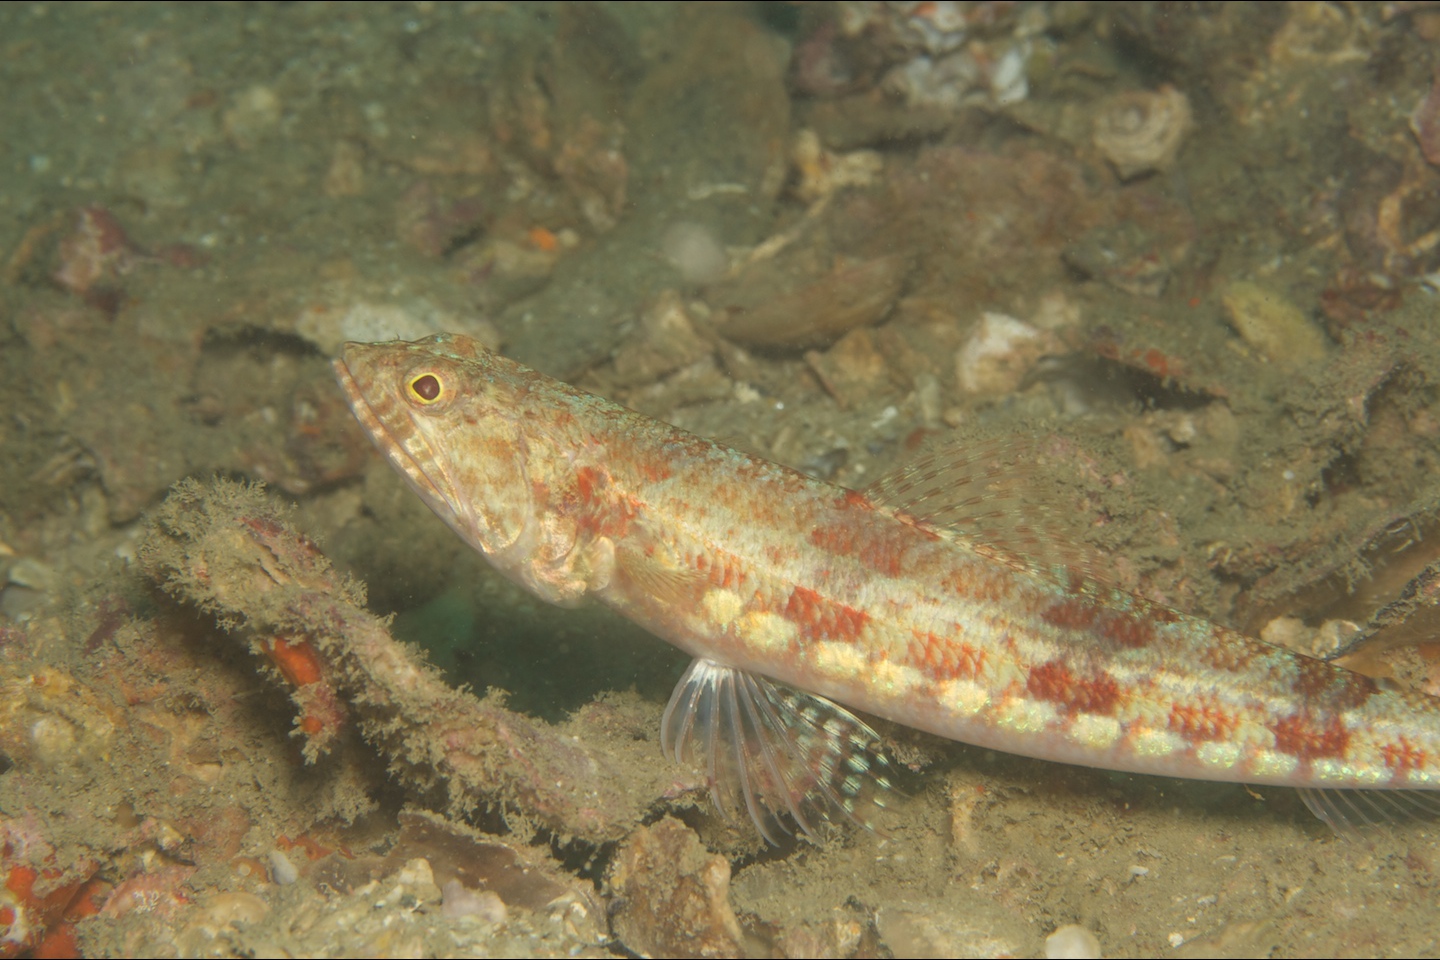 Reef lizardfish